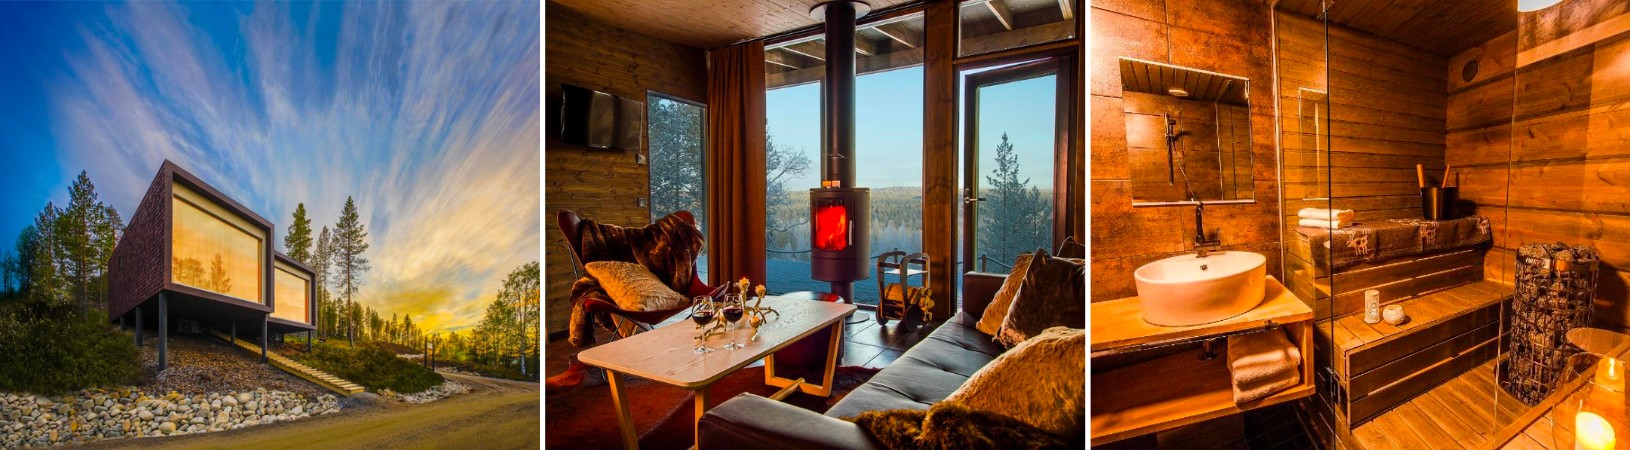 Arctic TreeHouse Hotel - De leukste hotels in Fins Lapland - Foto Booking.com